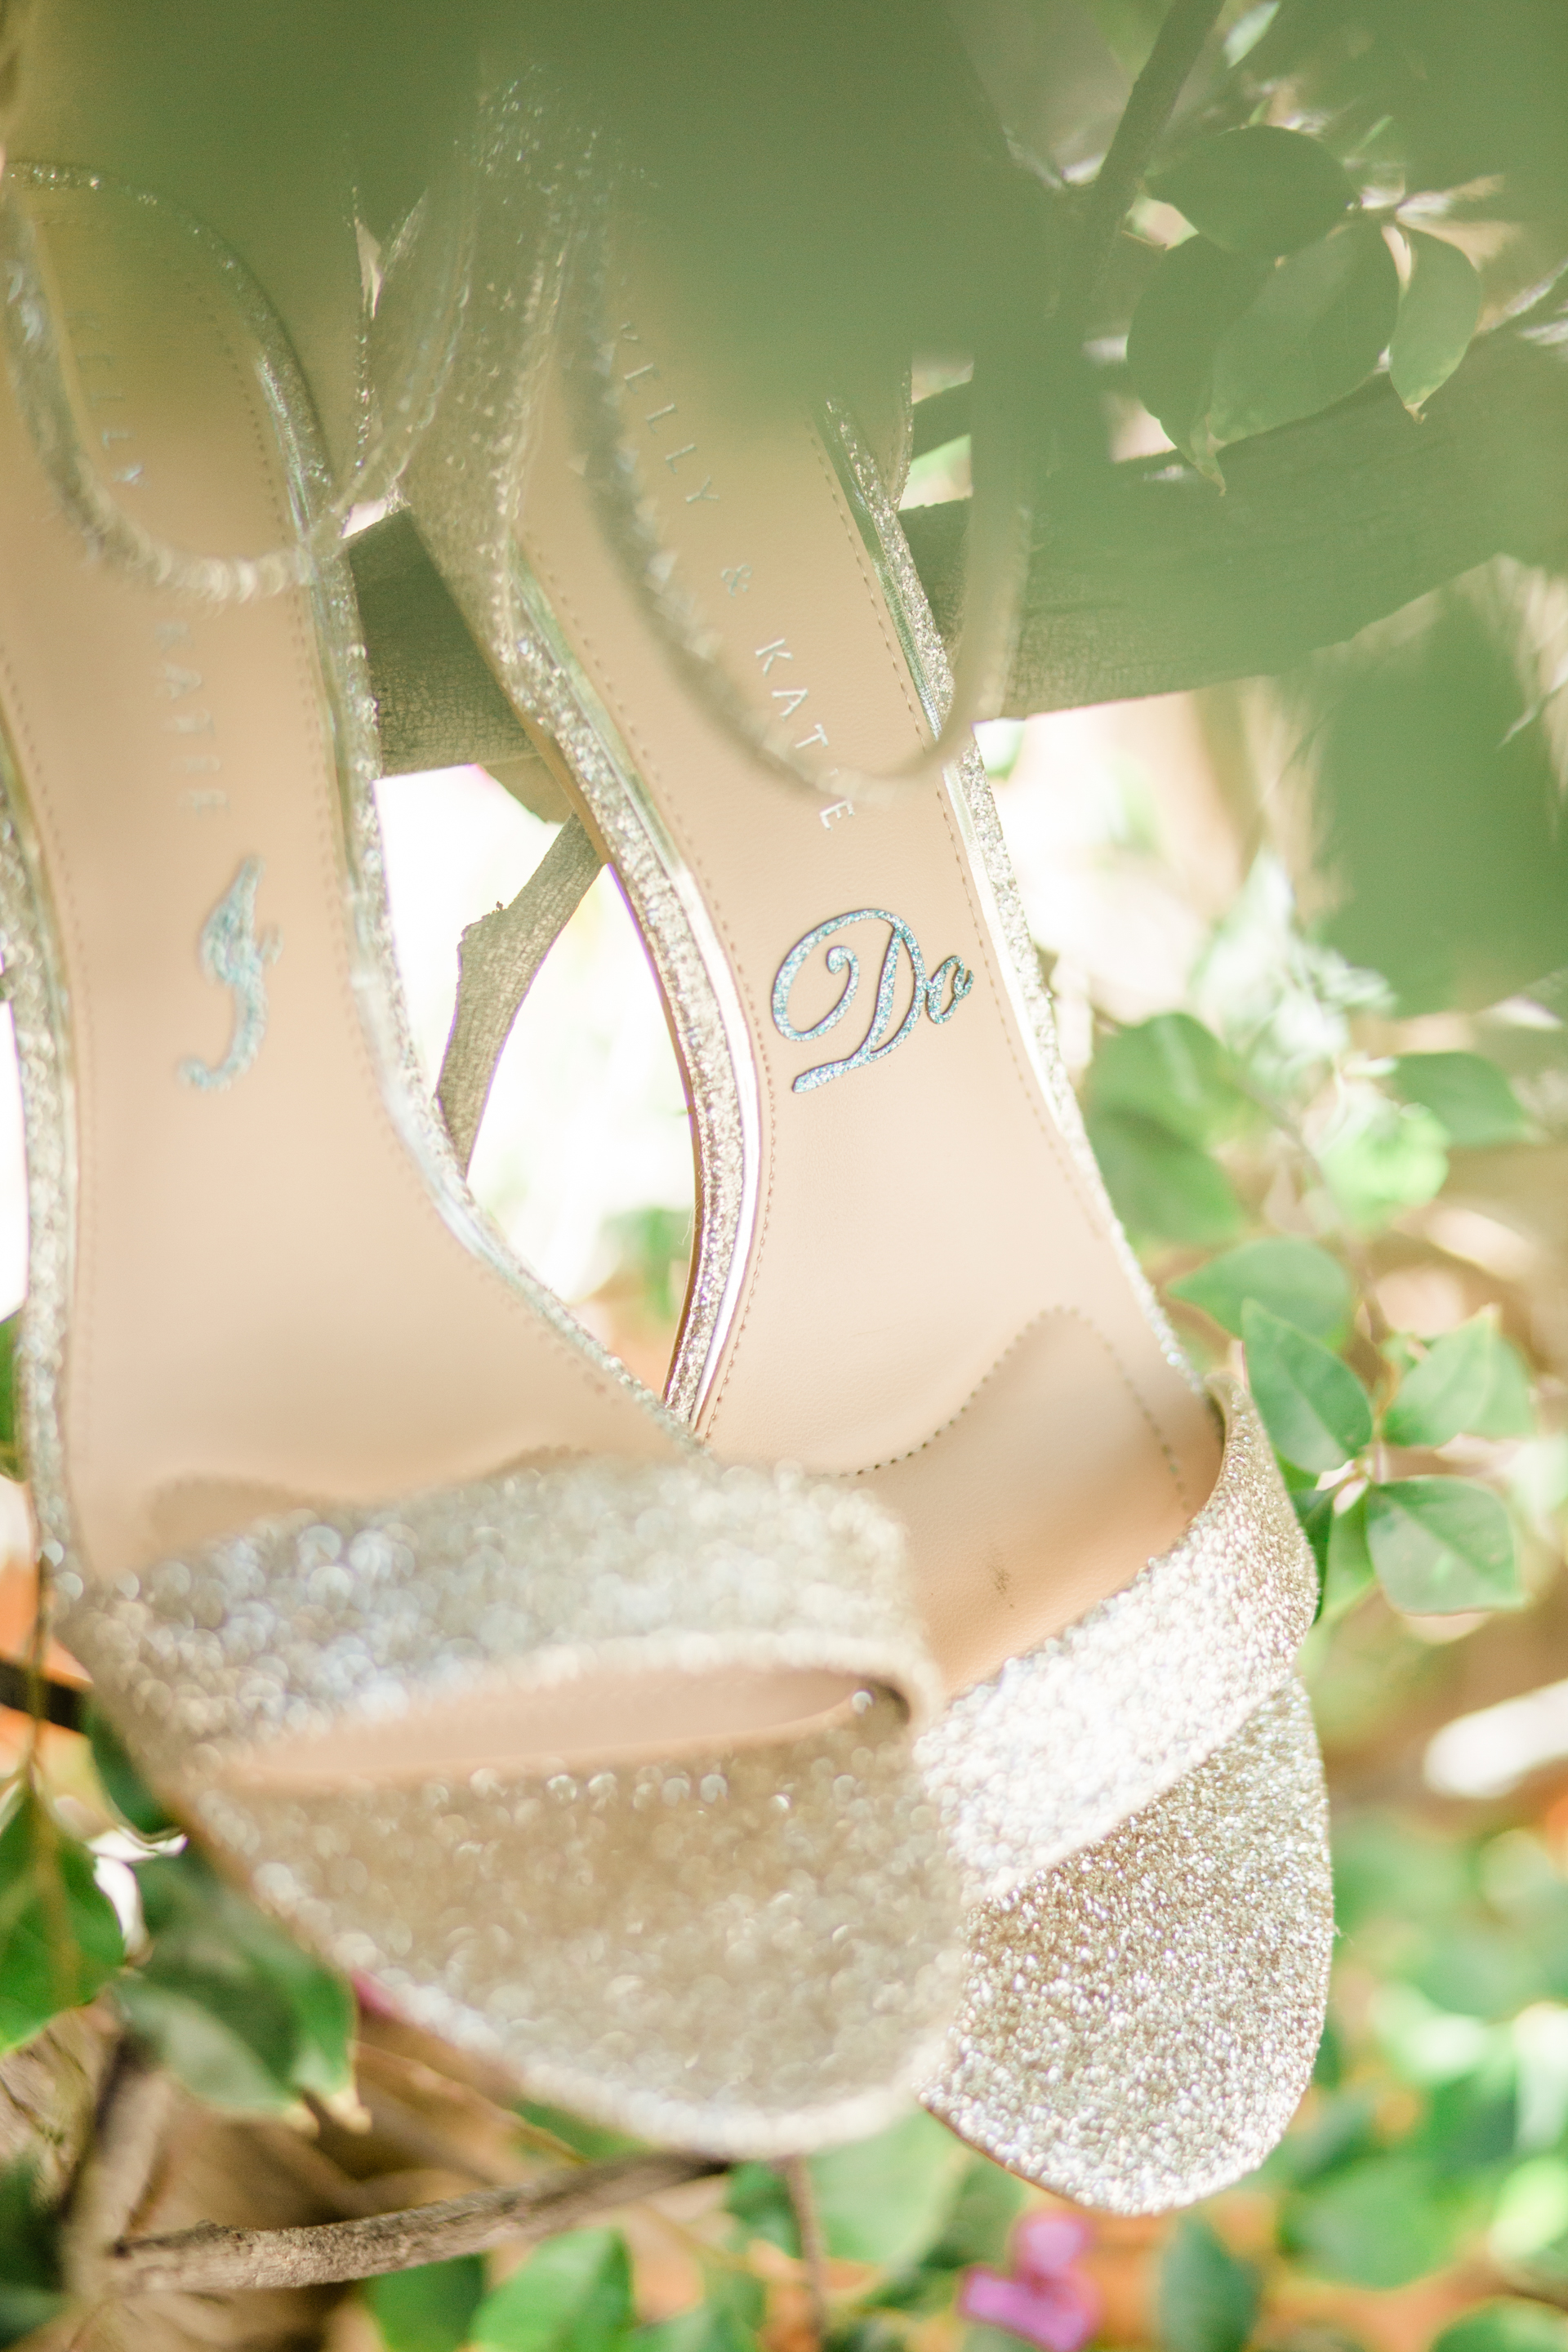 brides-wedding-shoes-hanging-hidden-gardens-boojum-tree-wedding